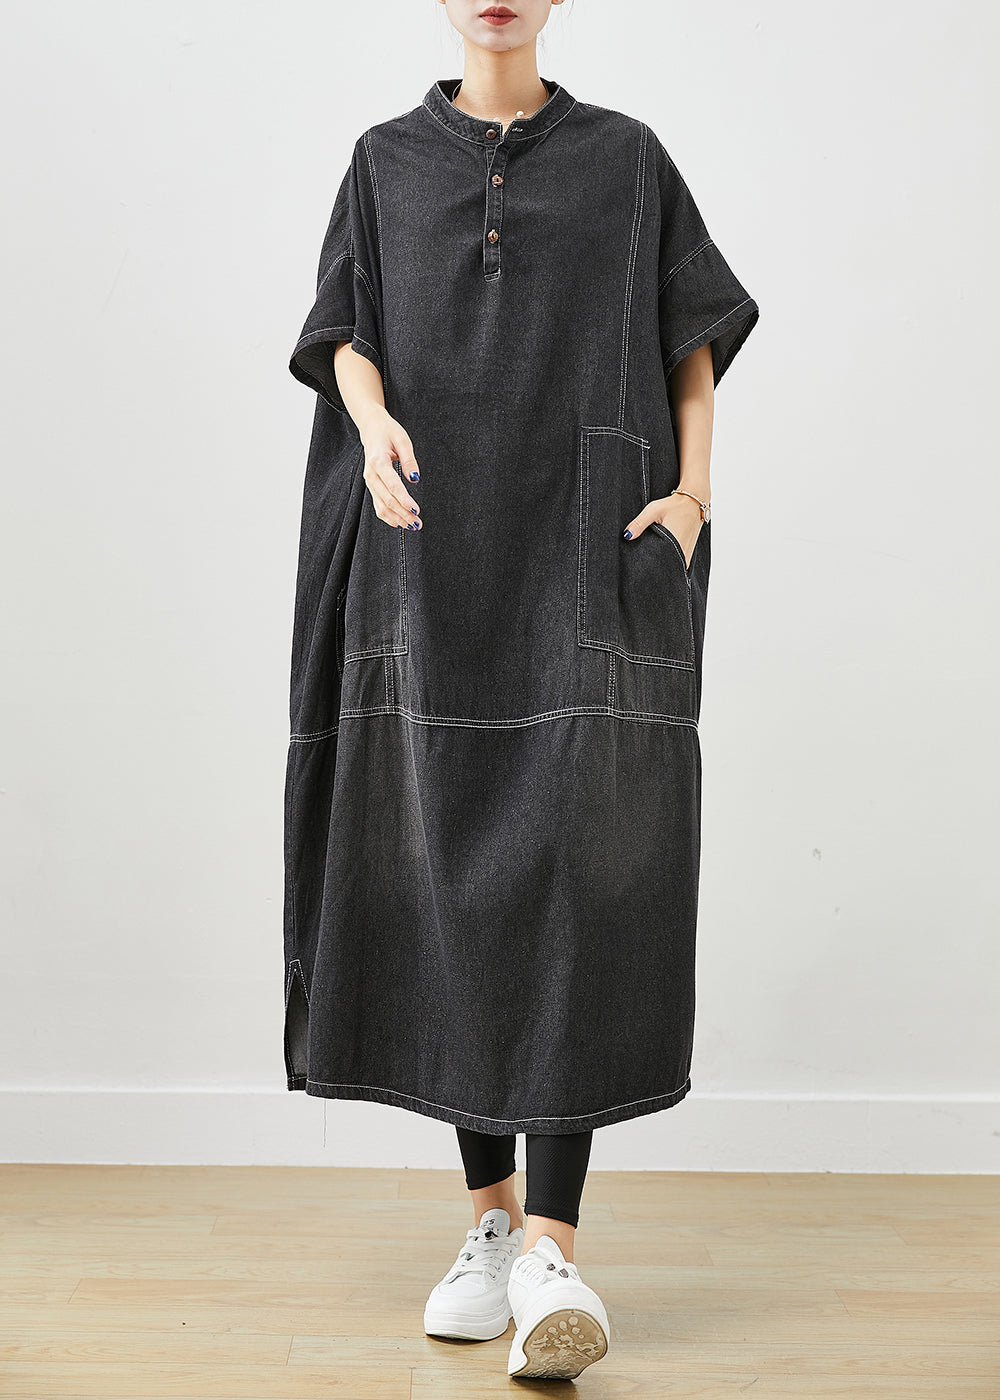 French Black Stand Collar Oversized Denim Holiday Dress Short Sleeve Ada Fashion